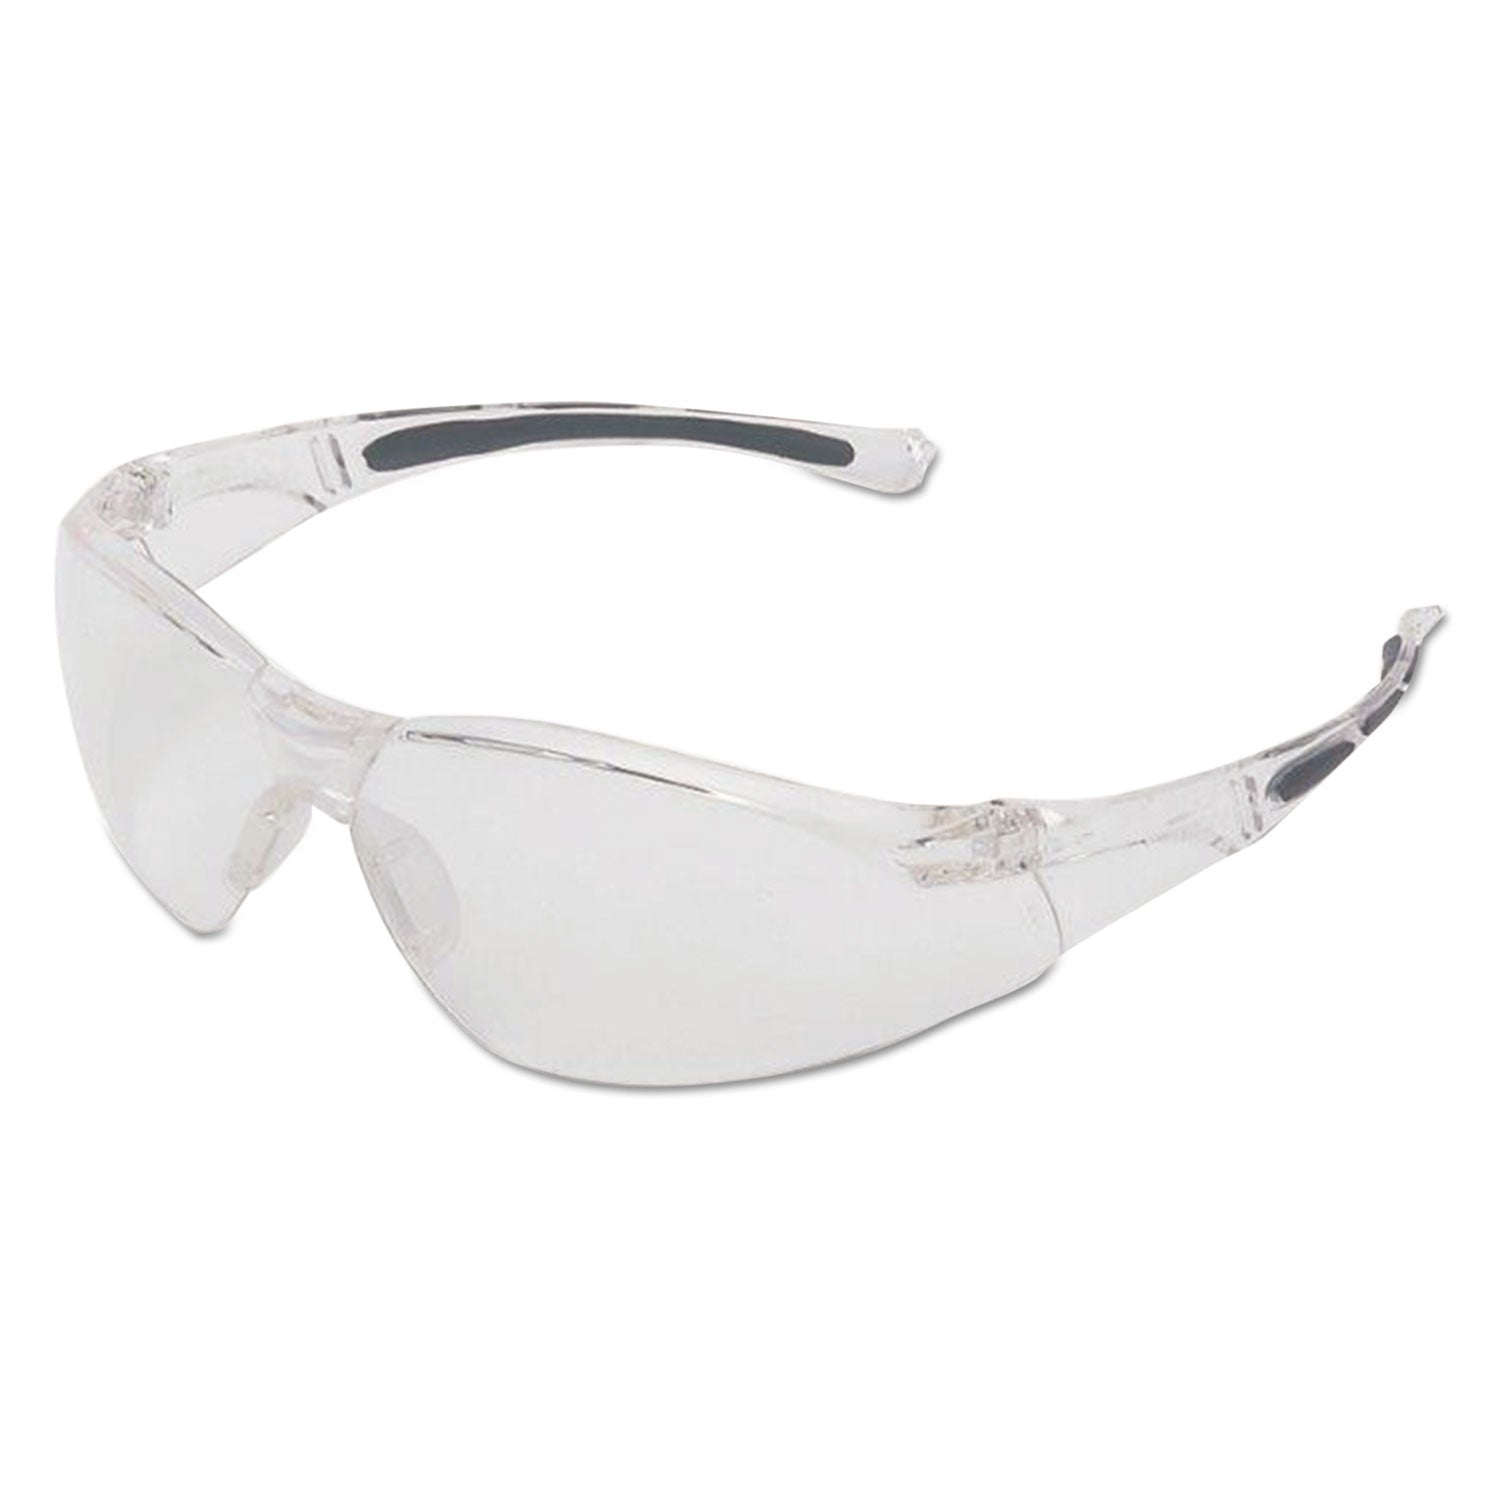 a800-series-safety-eyewear-scratch-resistant-clear-frame-clear-lens_uvxa800 - 1